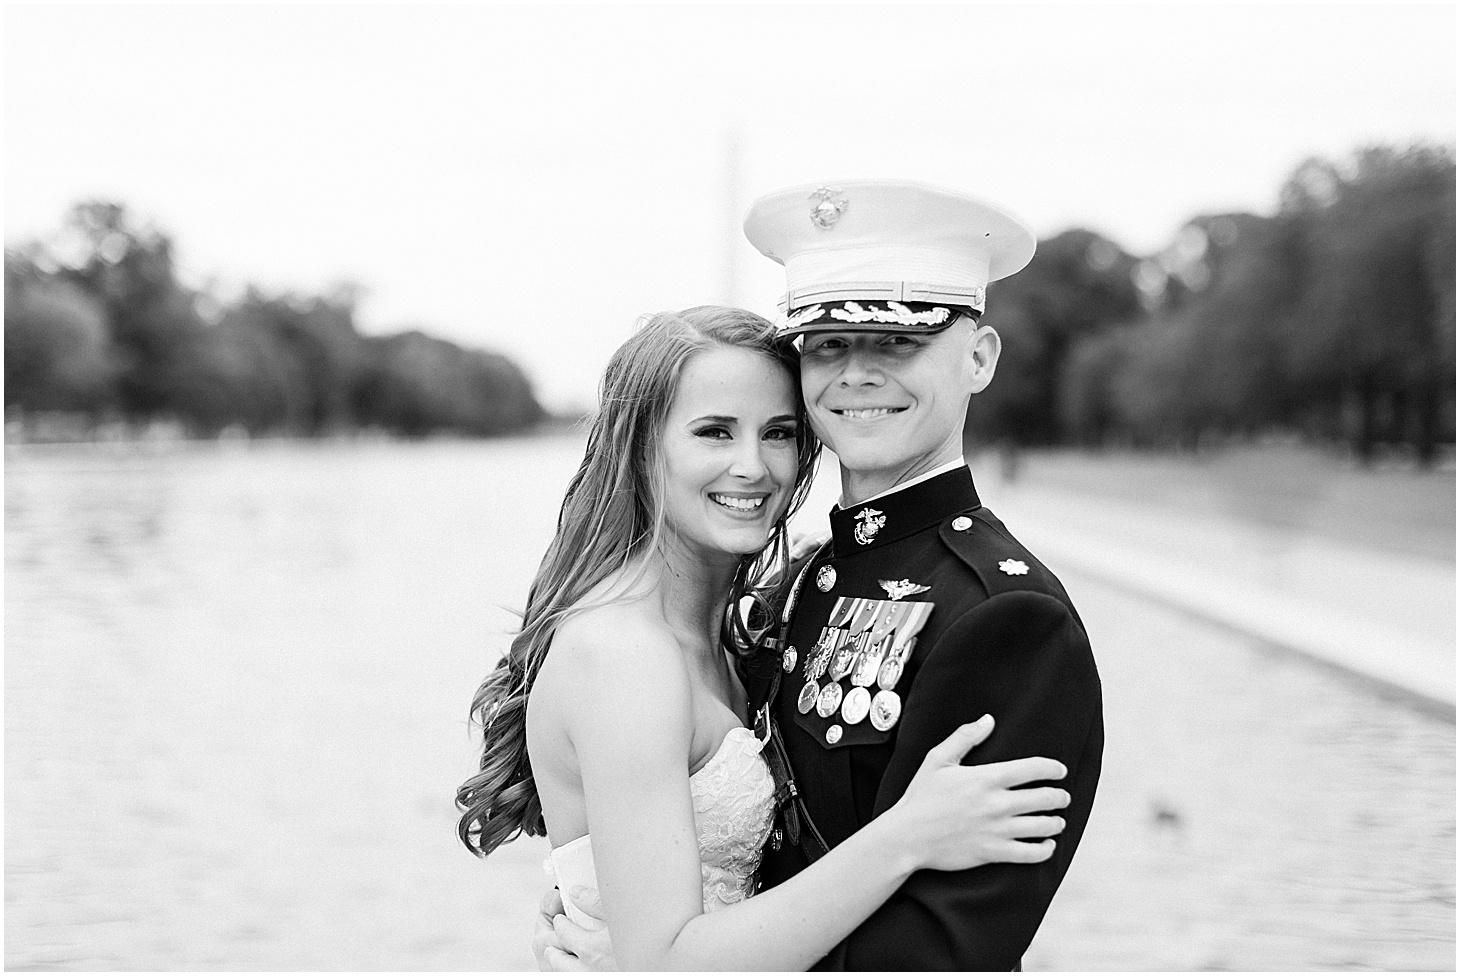 Spring Wedding Portraits at Reflecting Pool, Intimate Military Wedding at DC War Memorial, Sarah Bradshaw Photography, DC Wedding Photographer